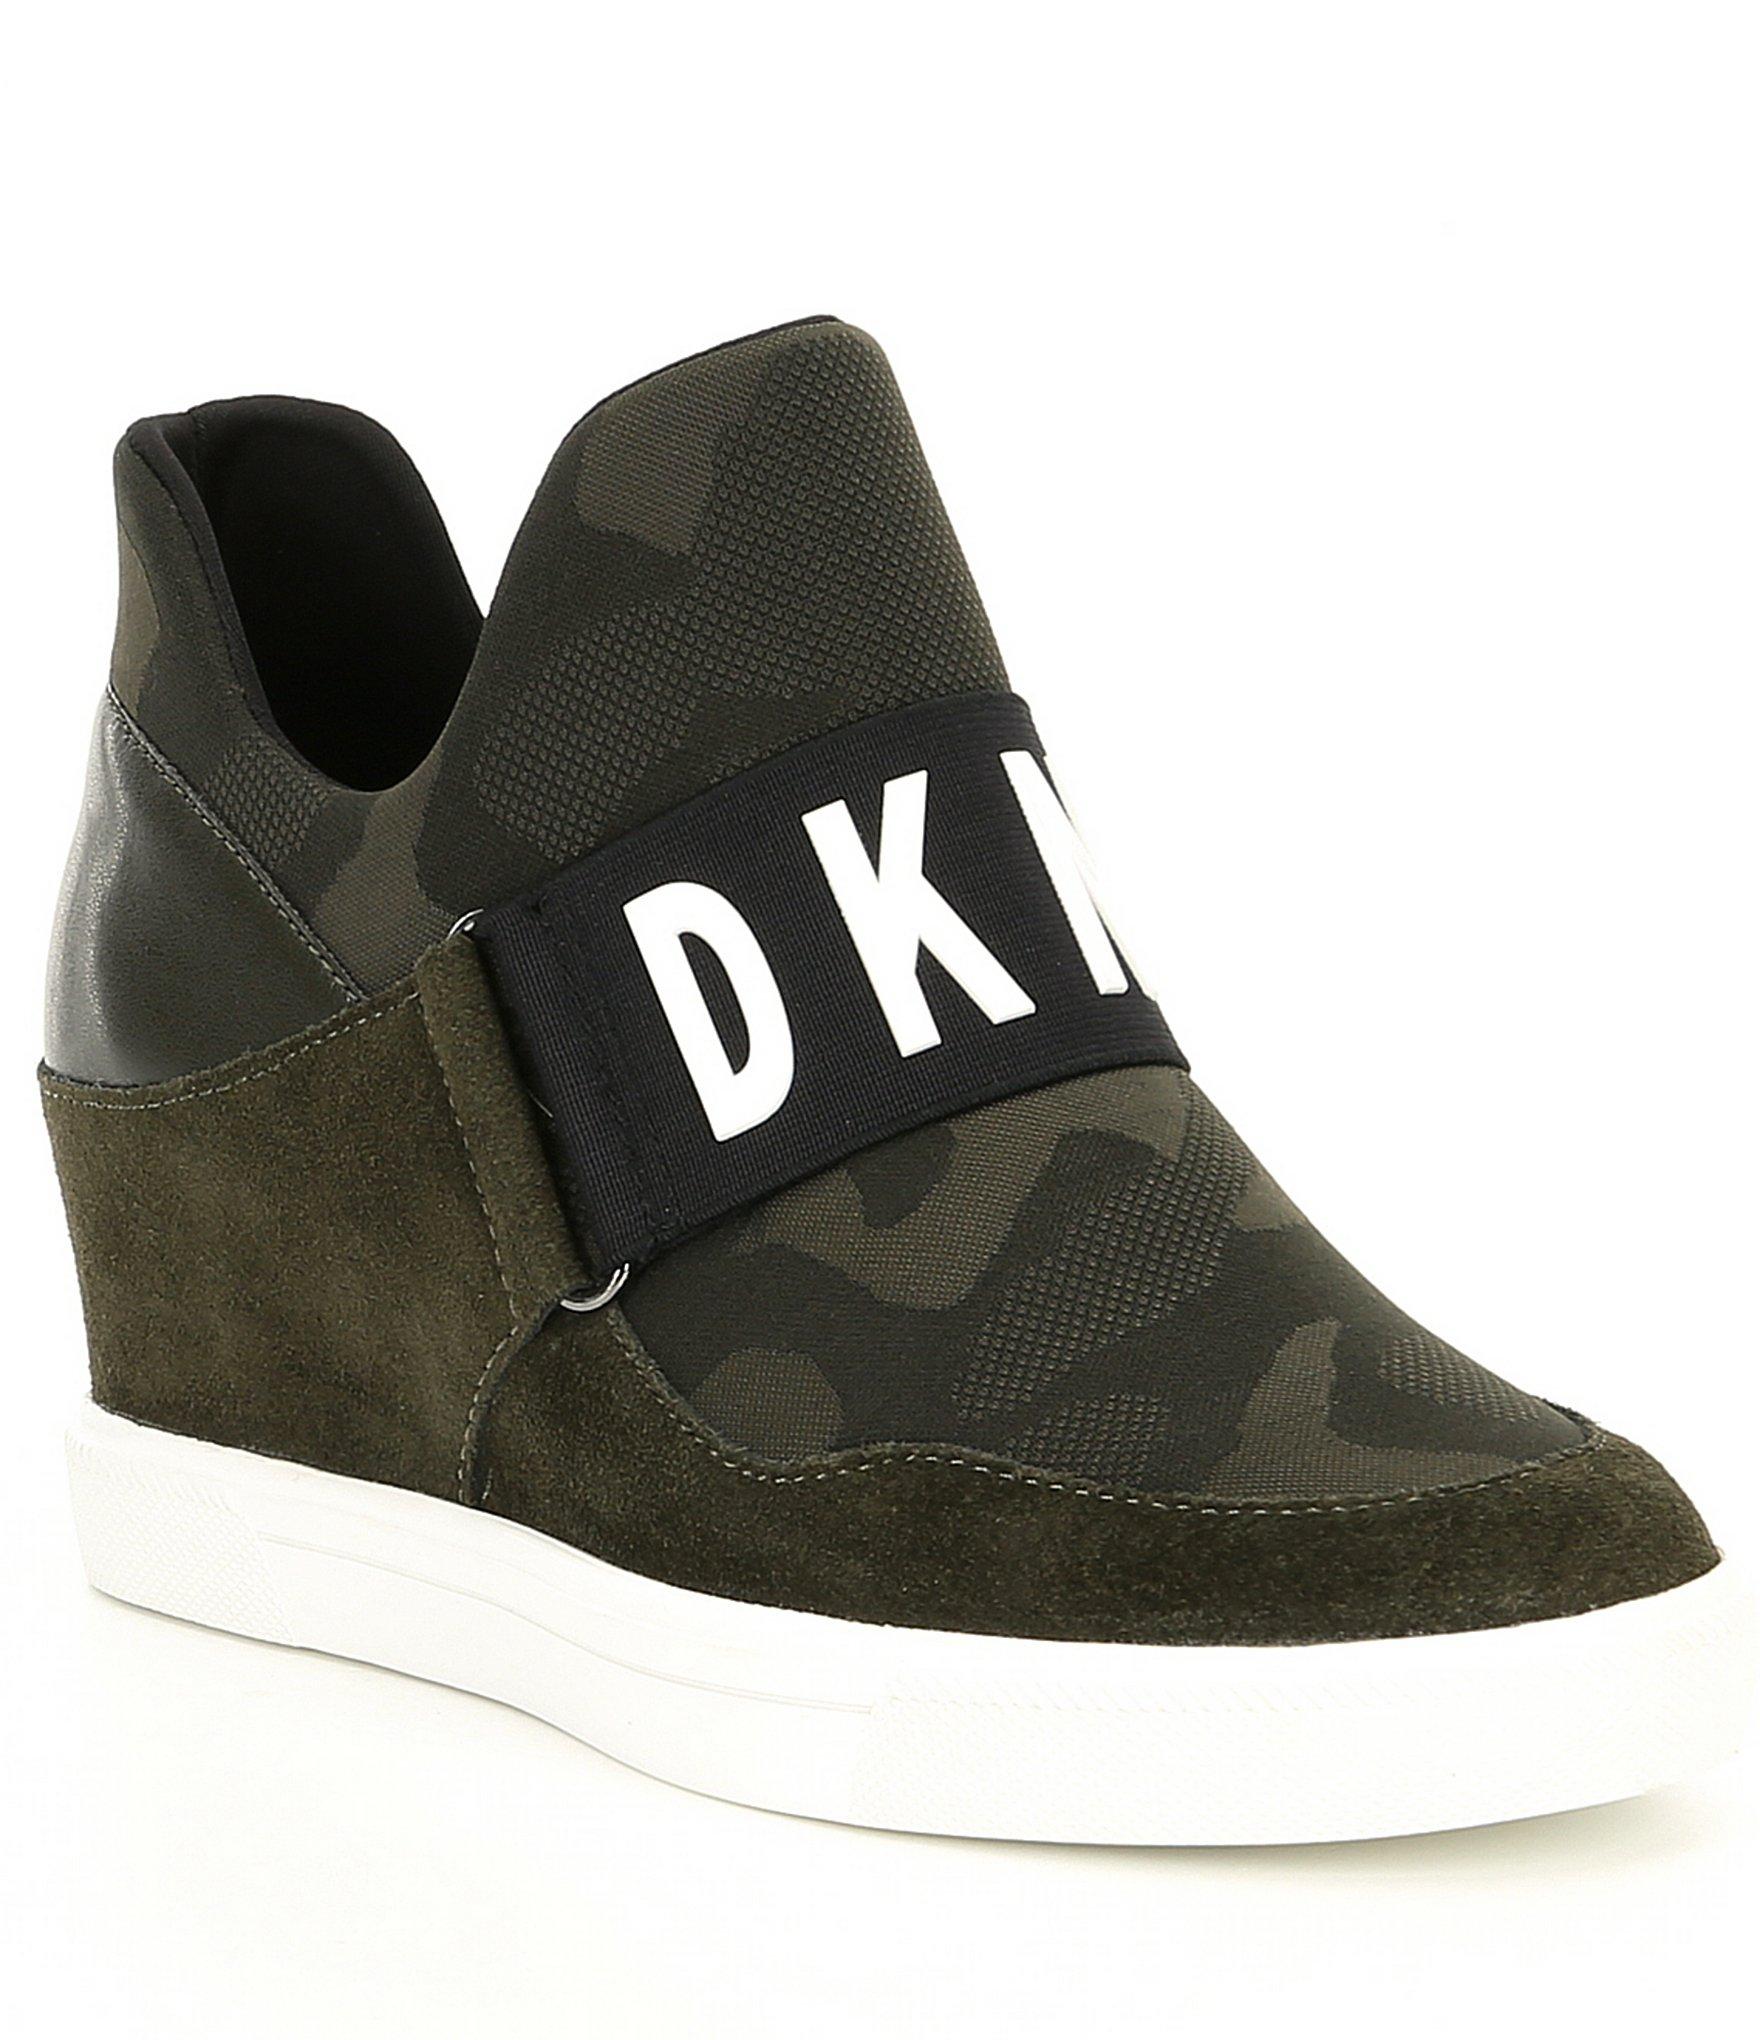 DKNY Cosmos Logo Hidden Wedge Camo Print Slip On Sneakers in Camo,Black ...